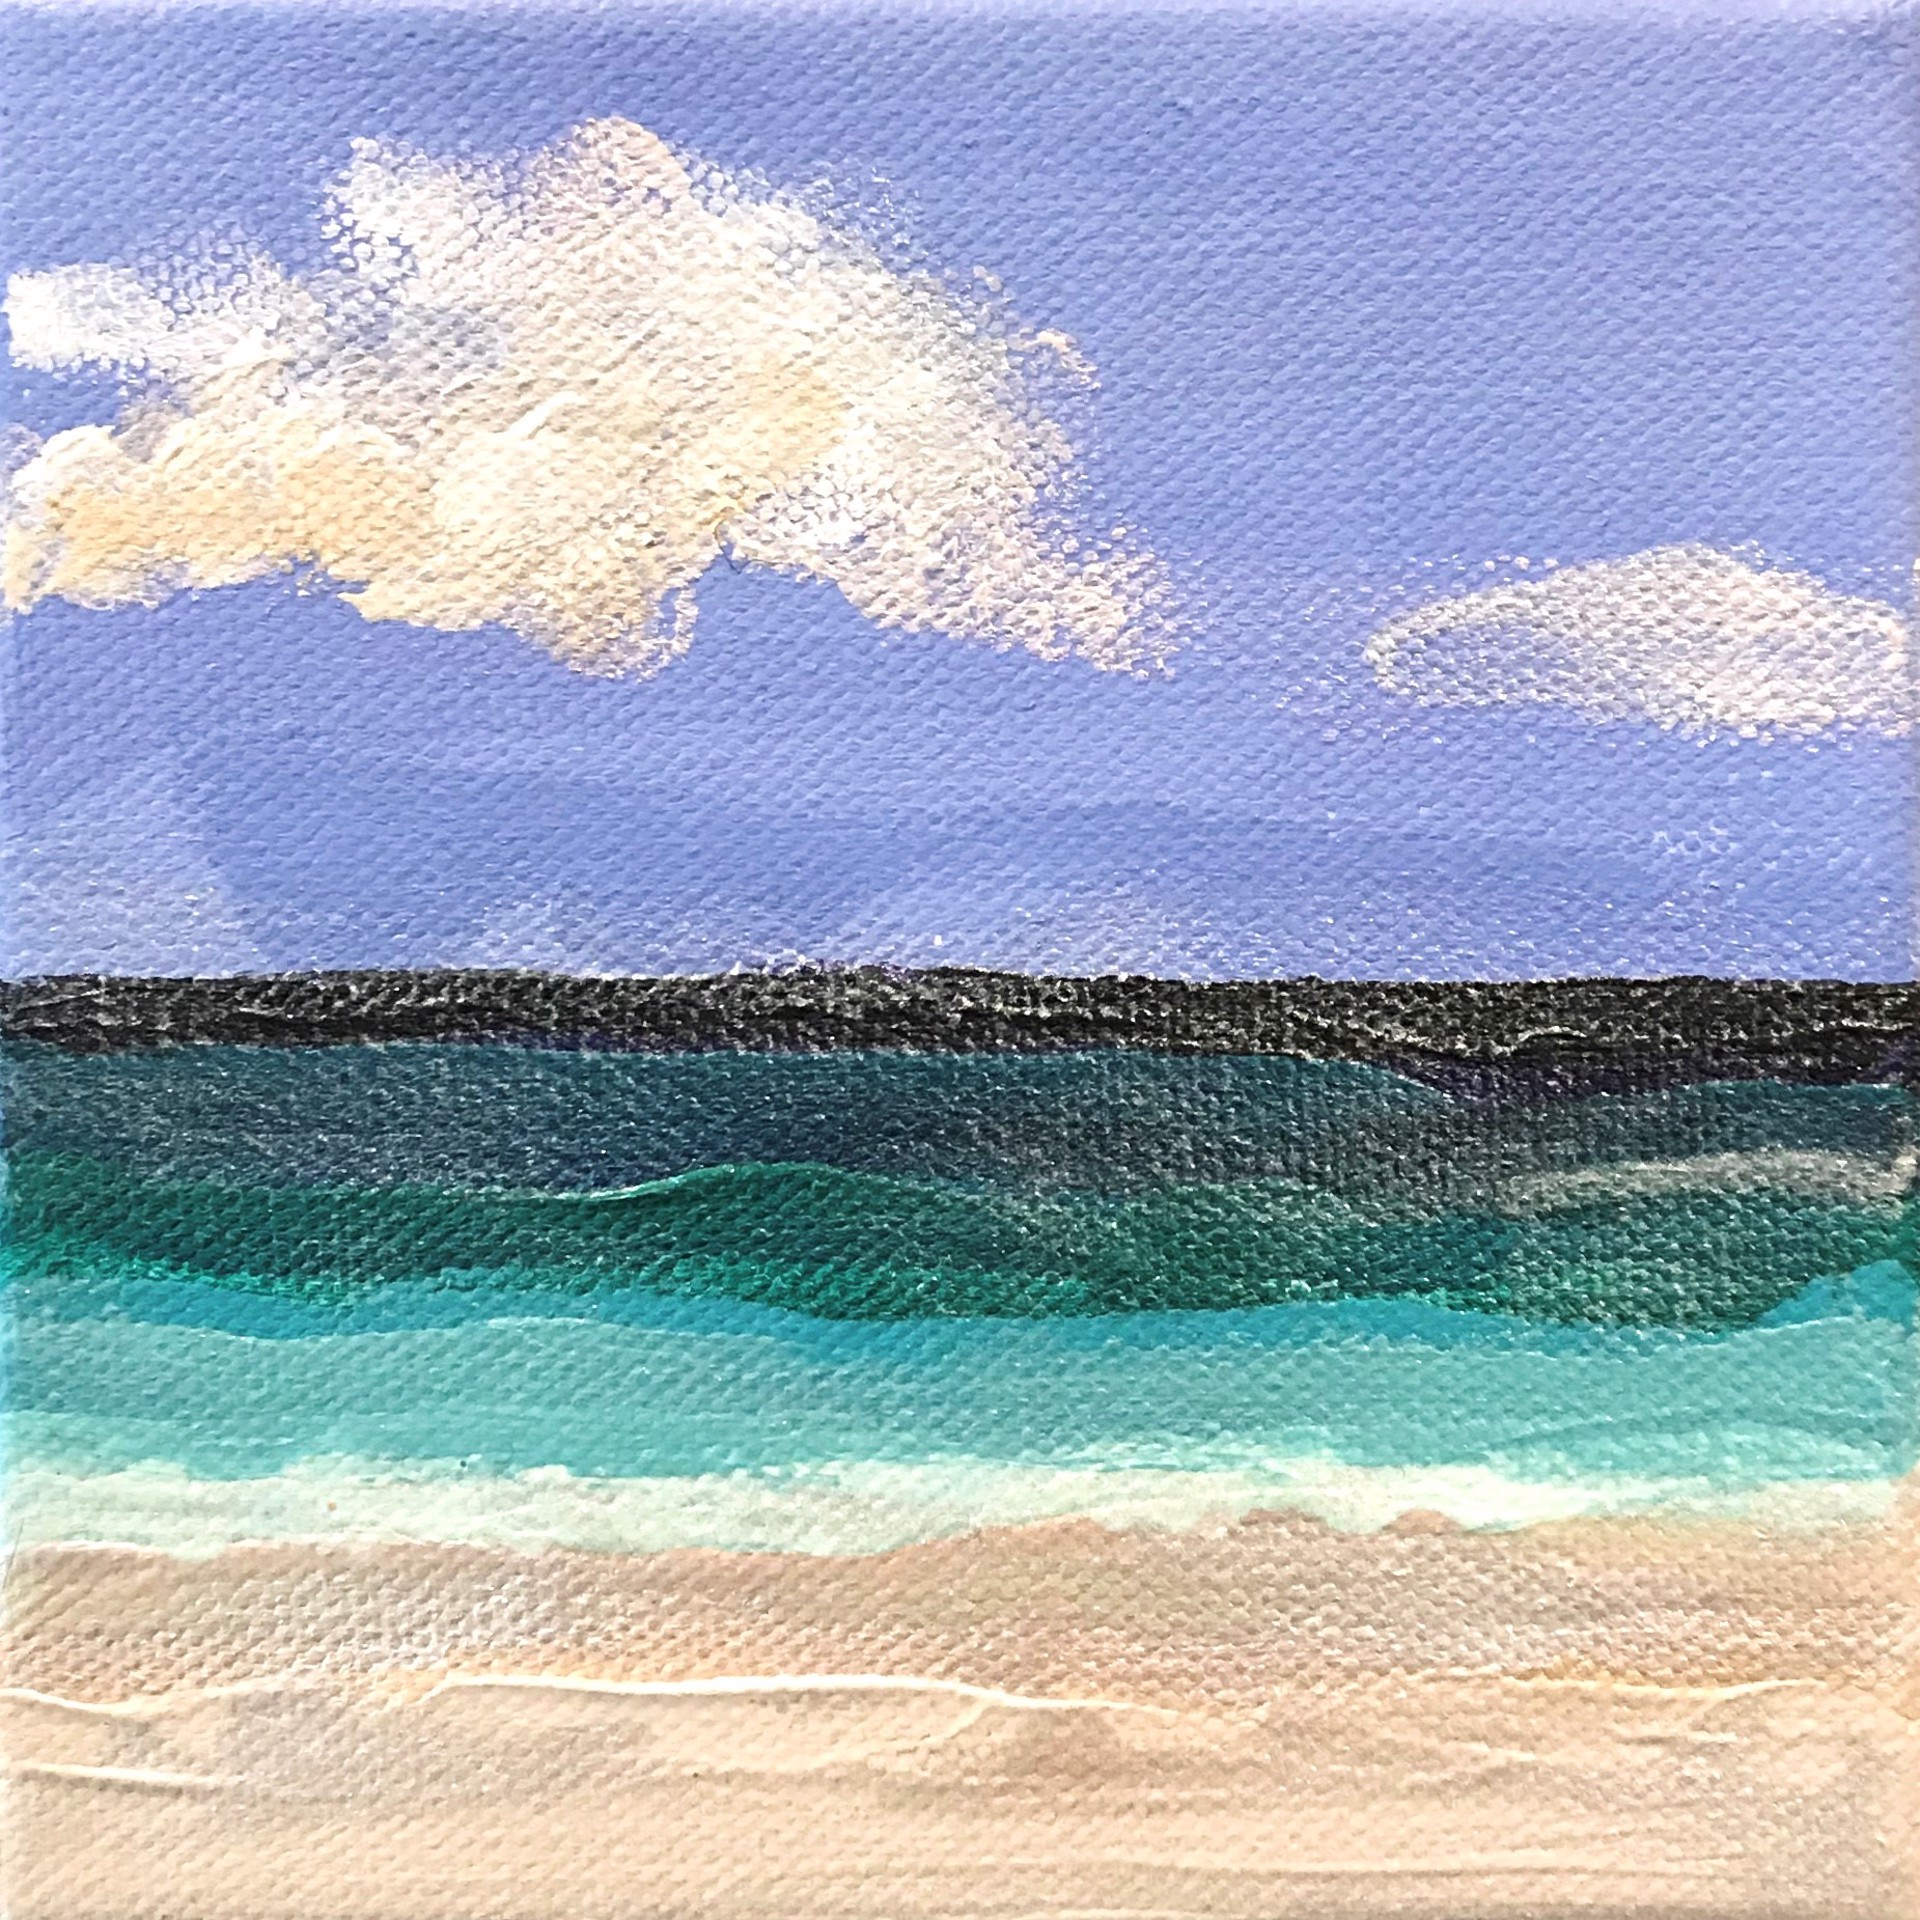 Beachfront No. 1 by Leslie Poteet Busker